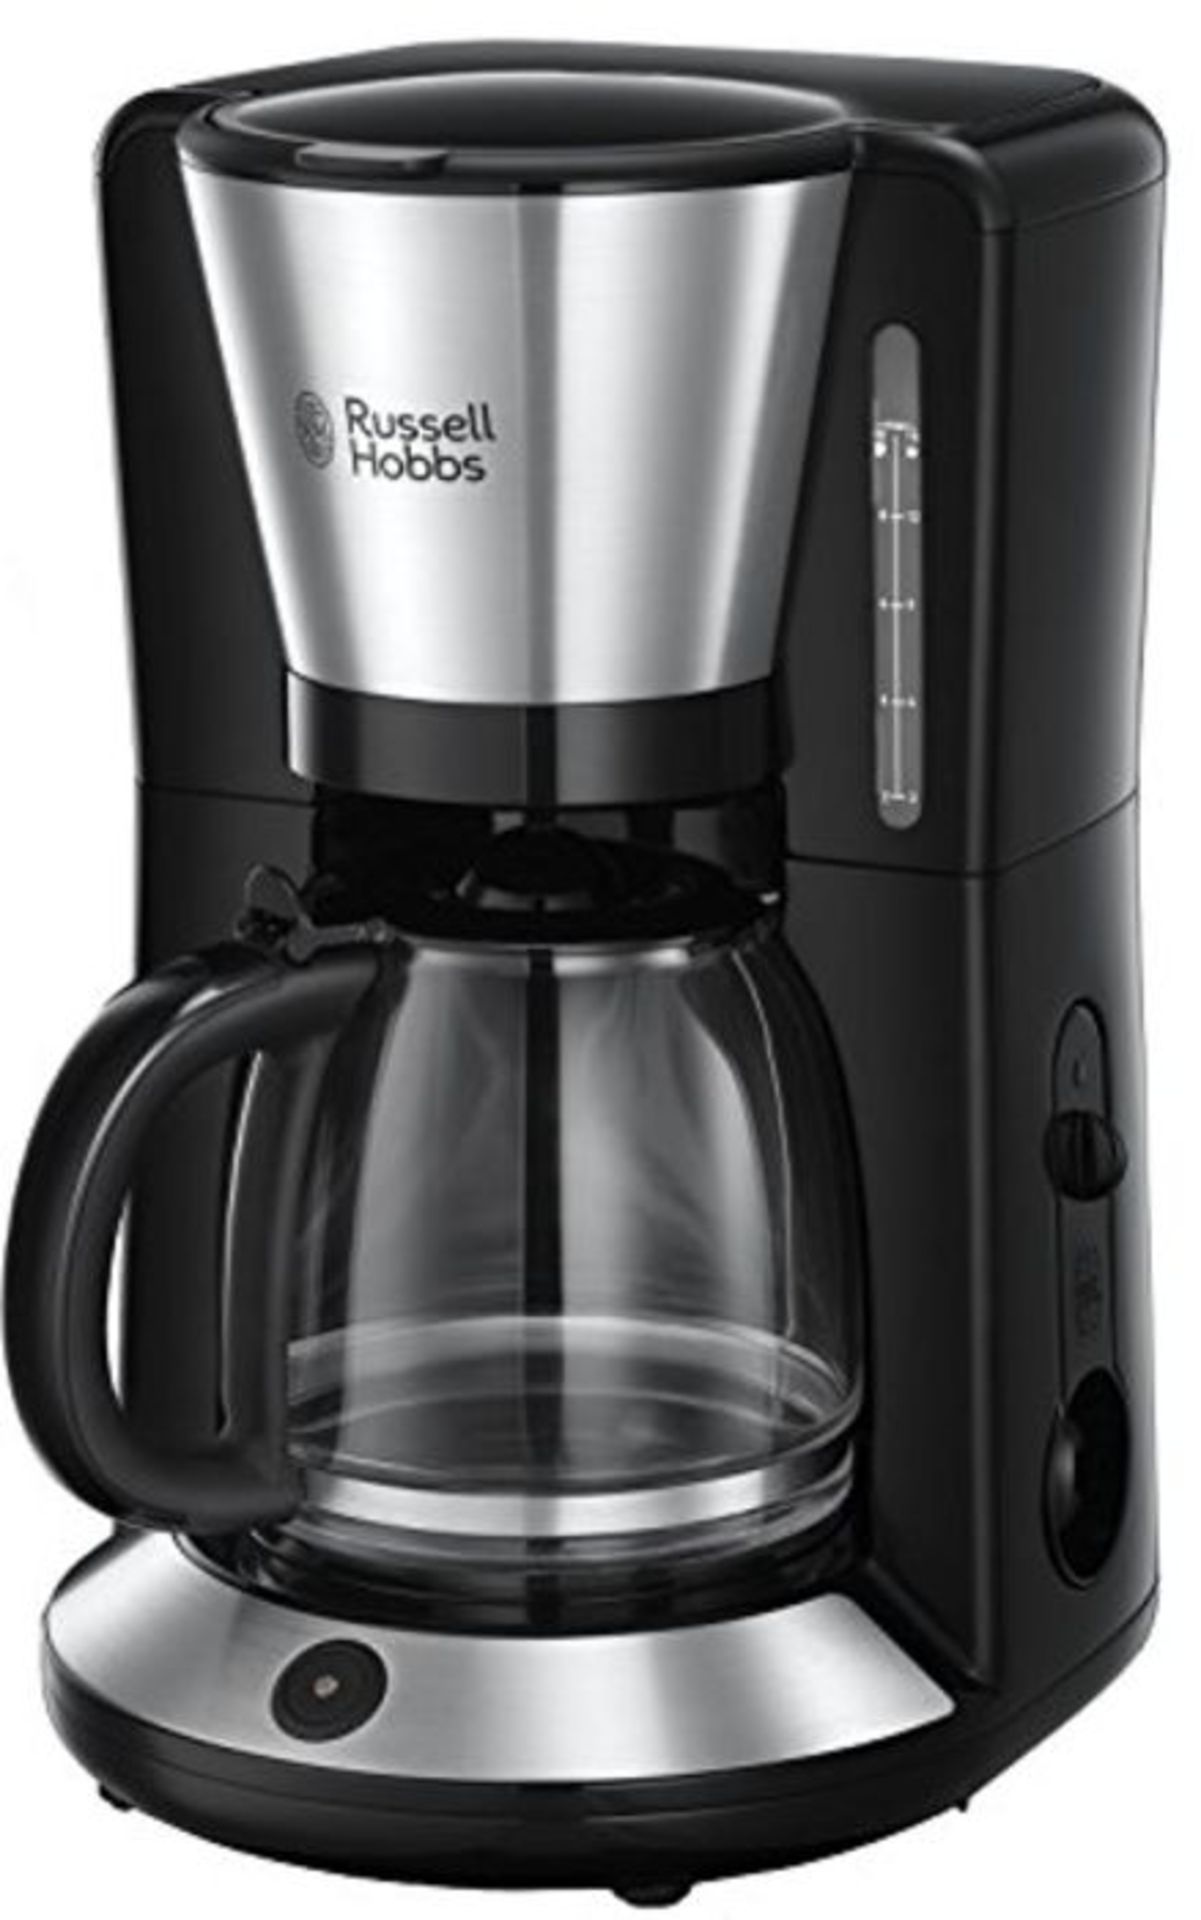 Russell Hobbs 24010-56 Coffee Machine Adventure-24010-56, Black